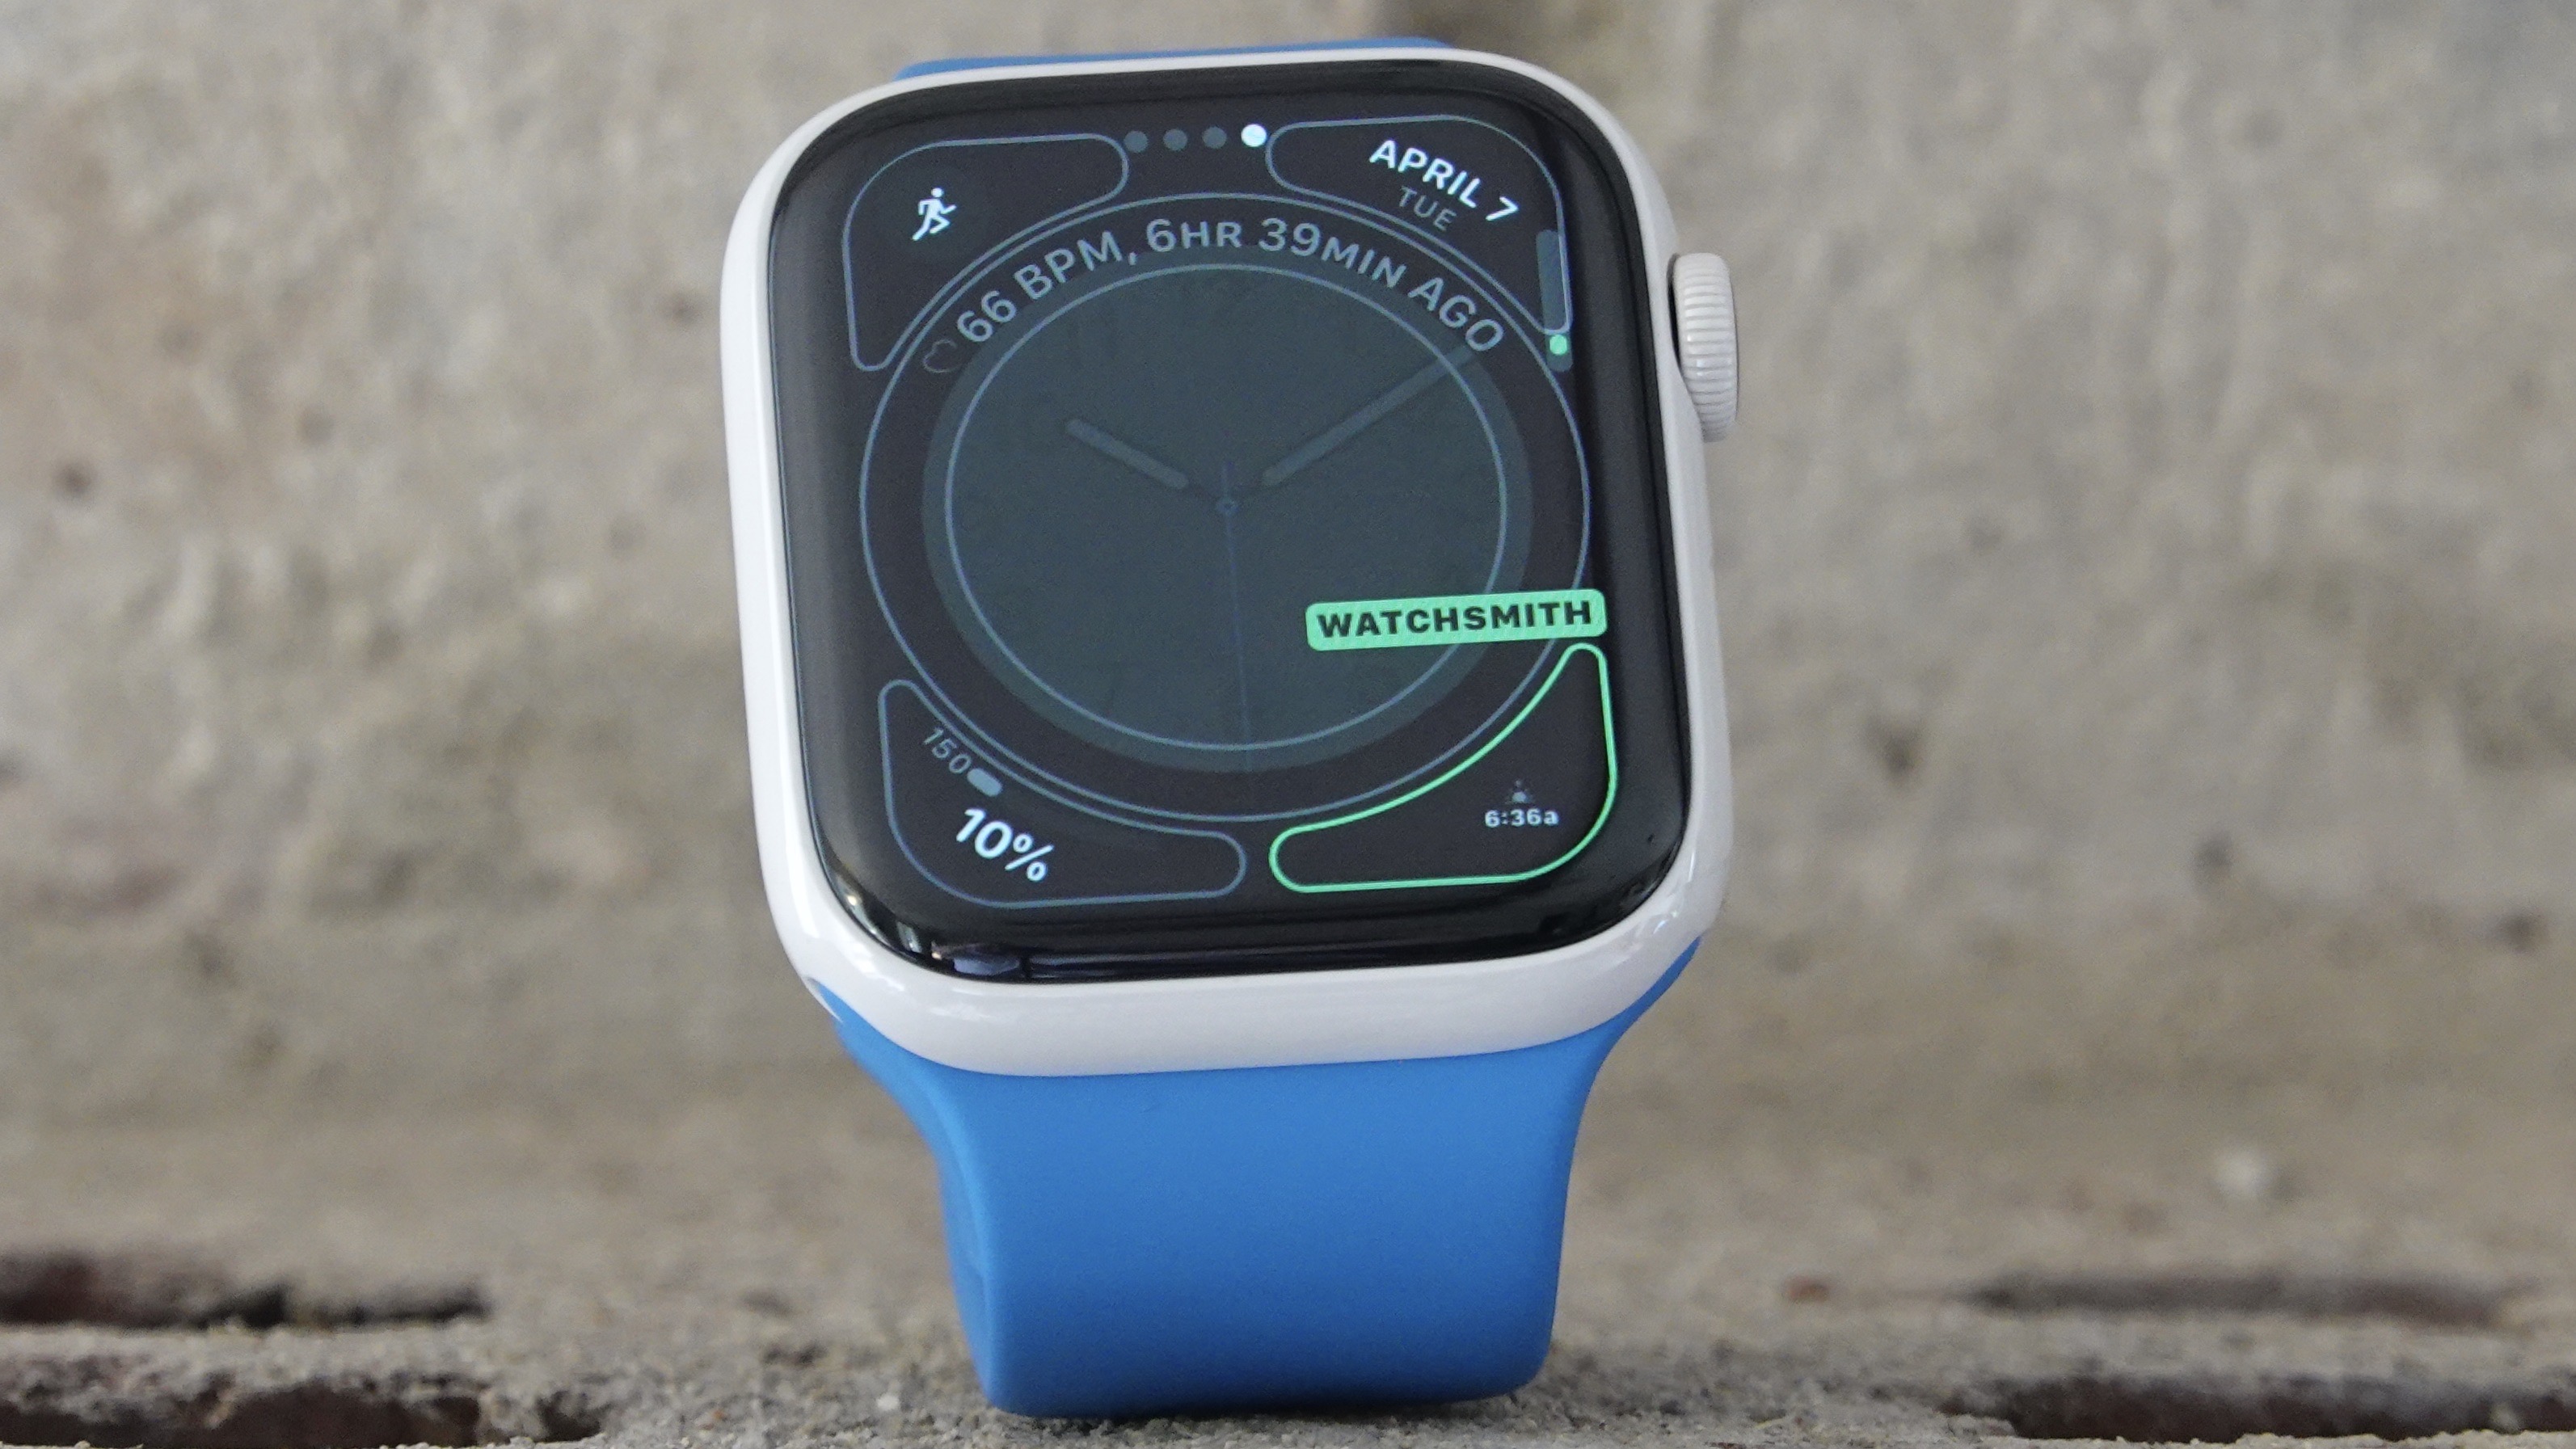 Apple Watch complications Watchsmith app